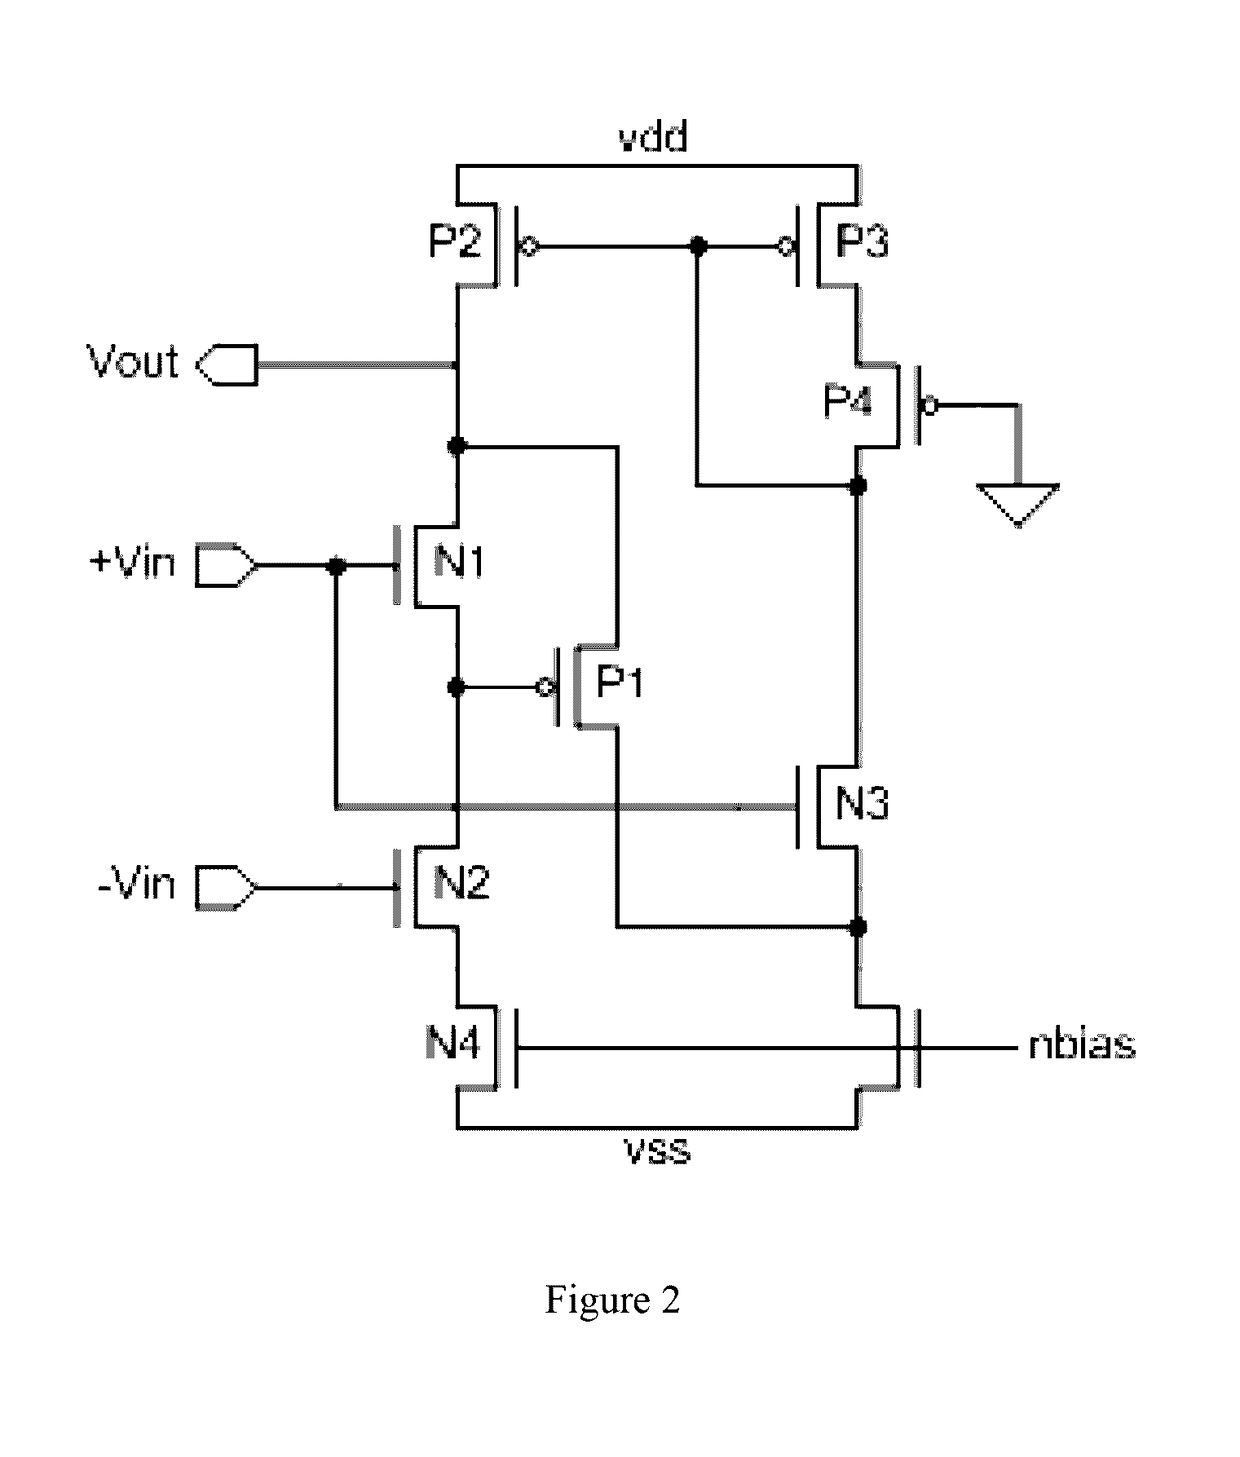 Interleaved successive approximation register analog to digital converter